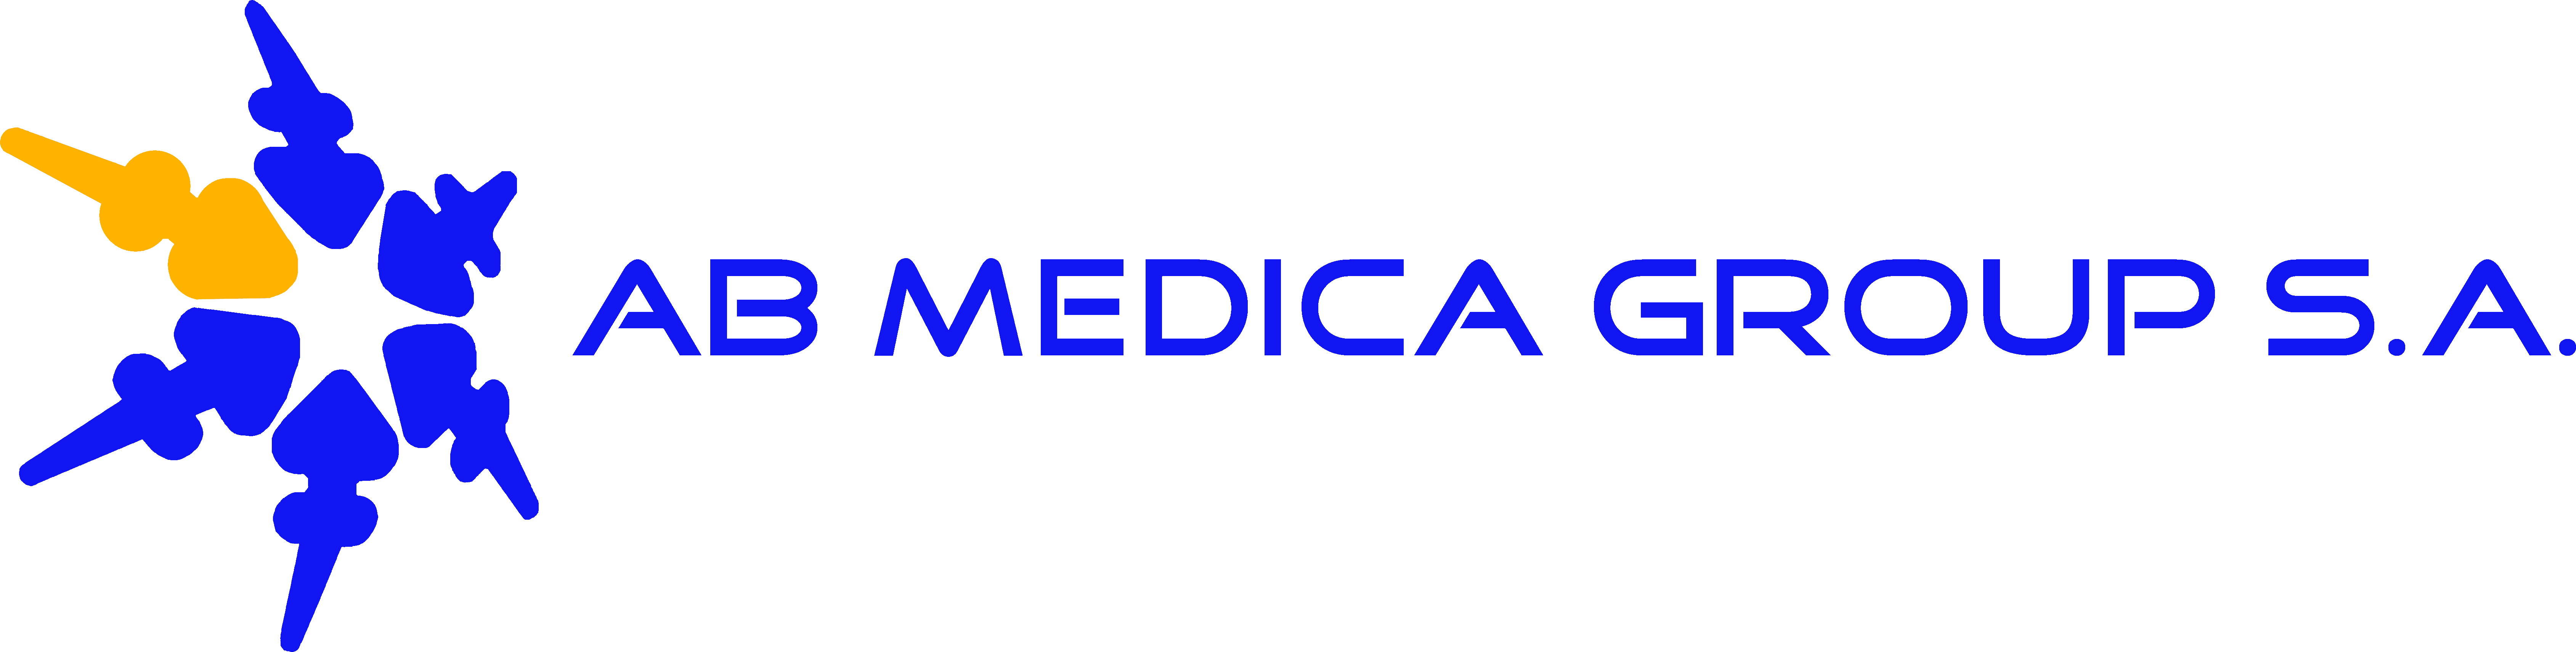 abmedicagroup2017